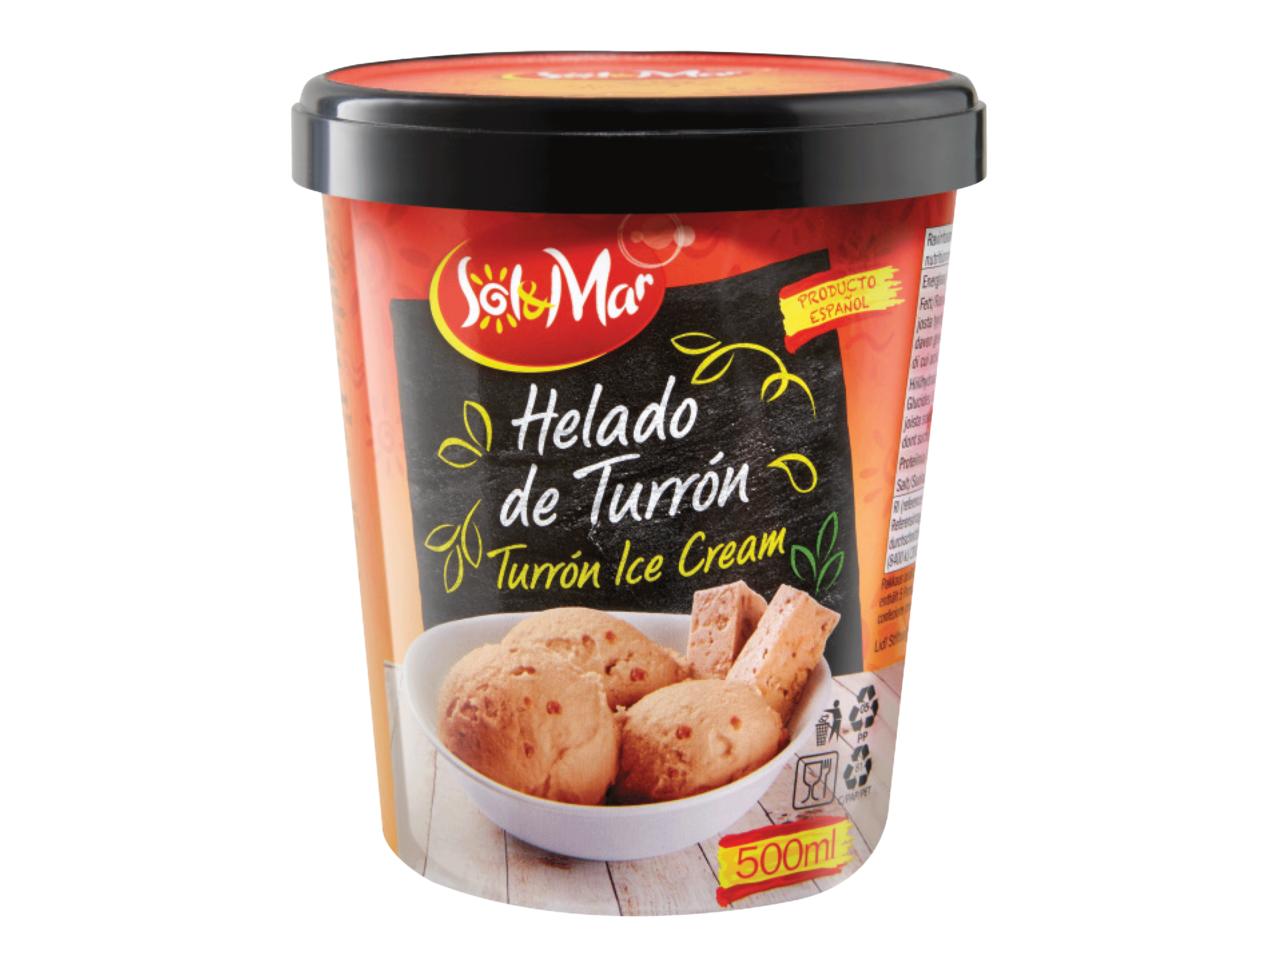 SOL & MAR Turrón Ice Cream